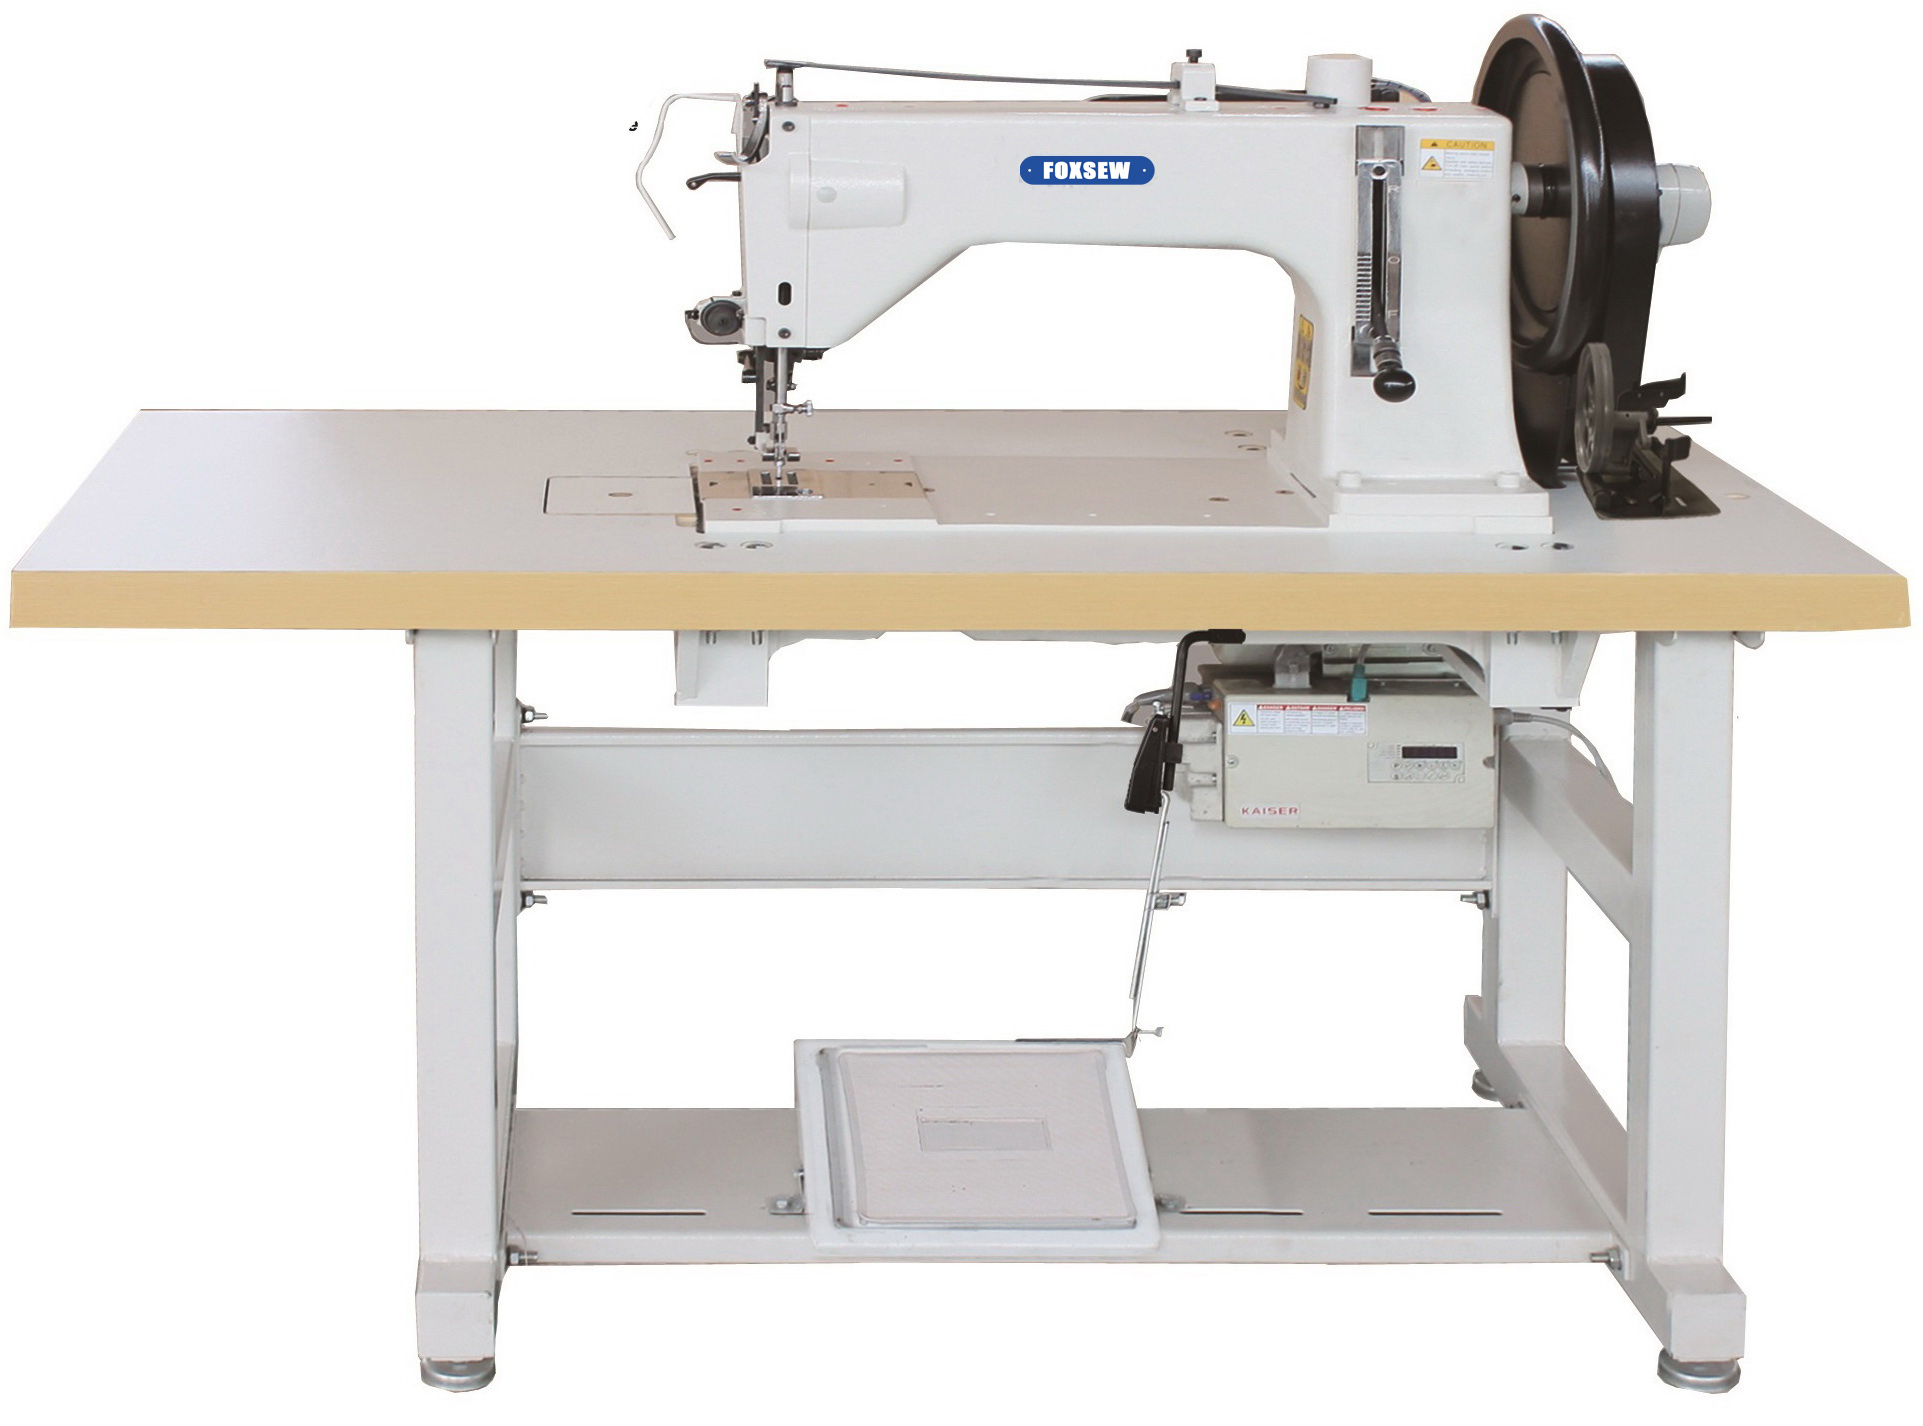 KD-733A Super Heavy Duty Top and Bottom Feed Lockstitch Sewing Machine